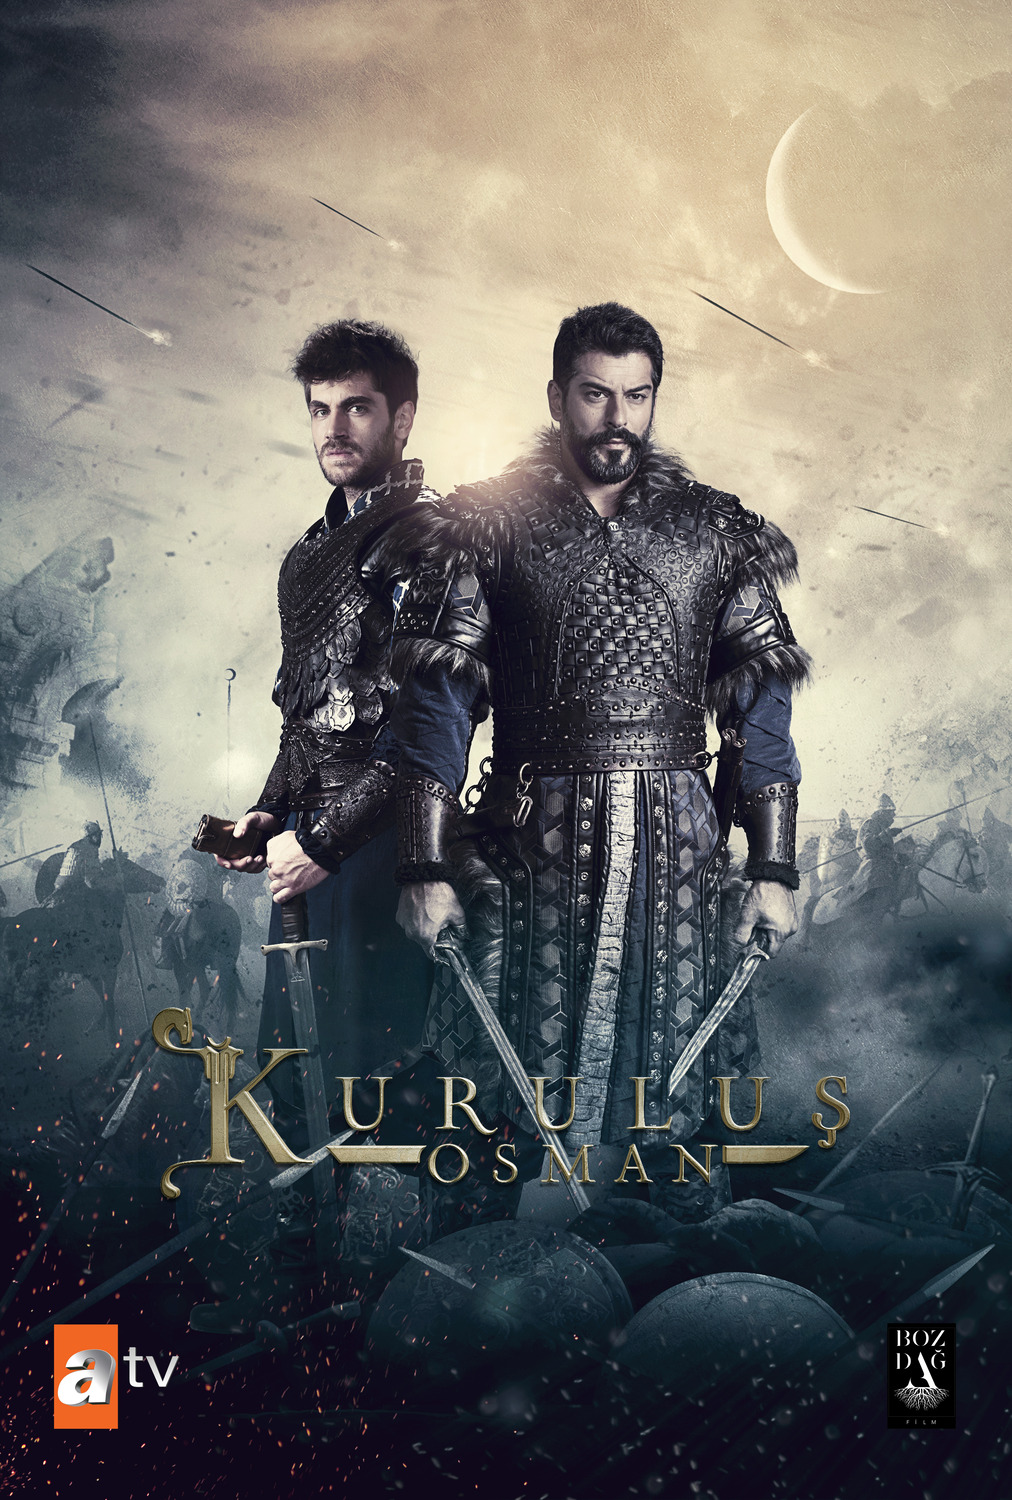 Extra Large TV Poster Image for Kurulus: Osman (#11 of 13)